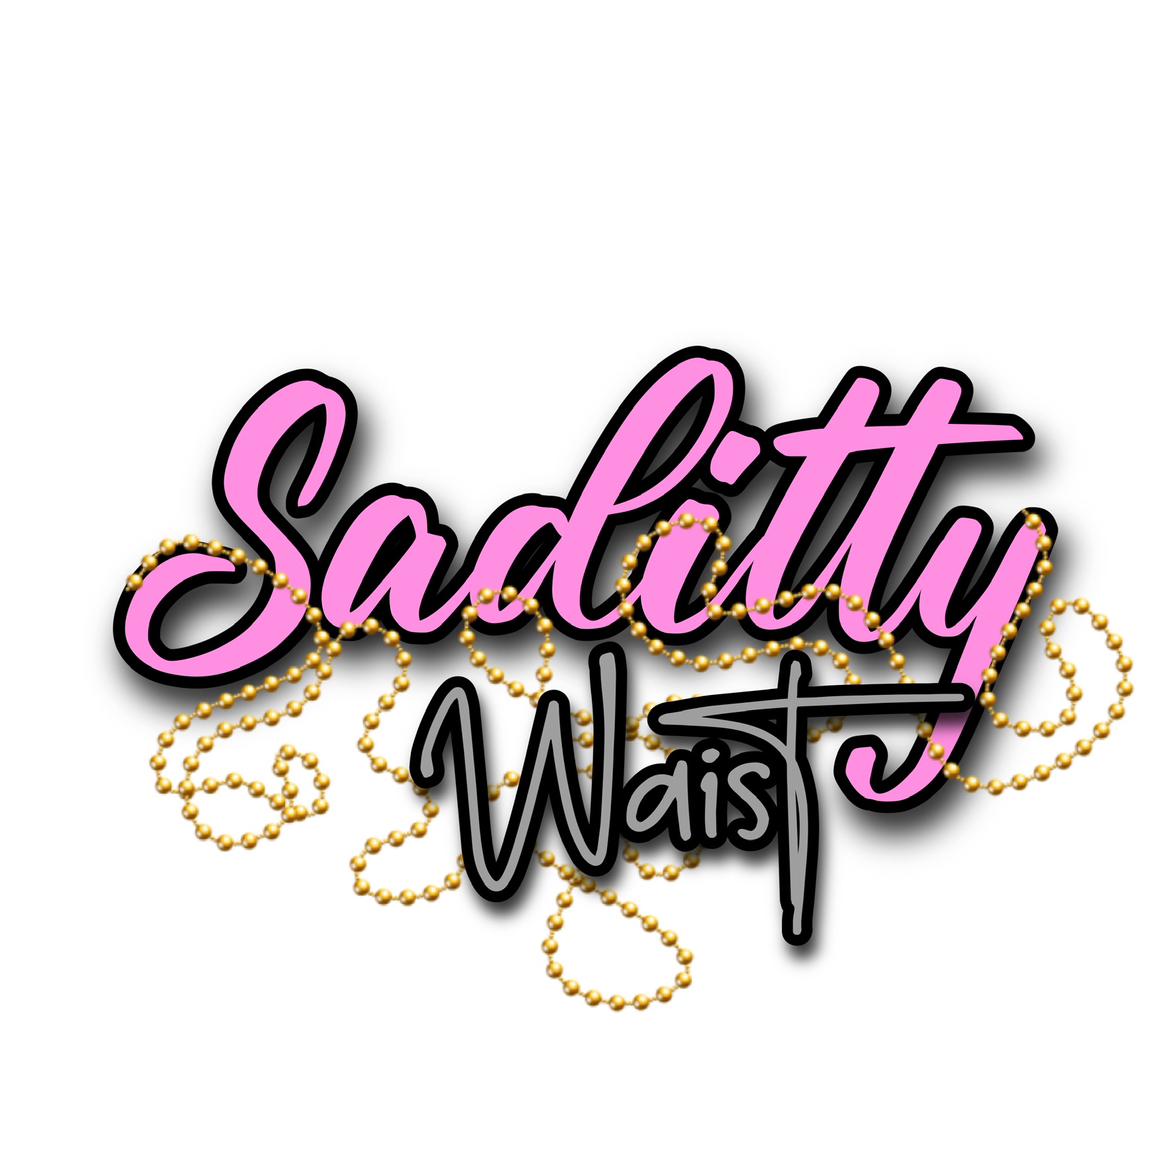 SadittyWaist's images